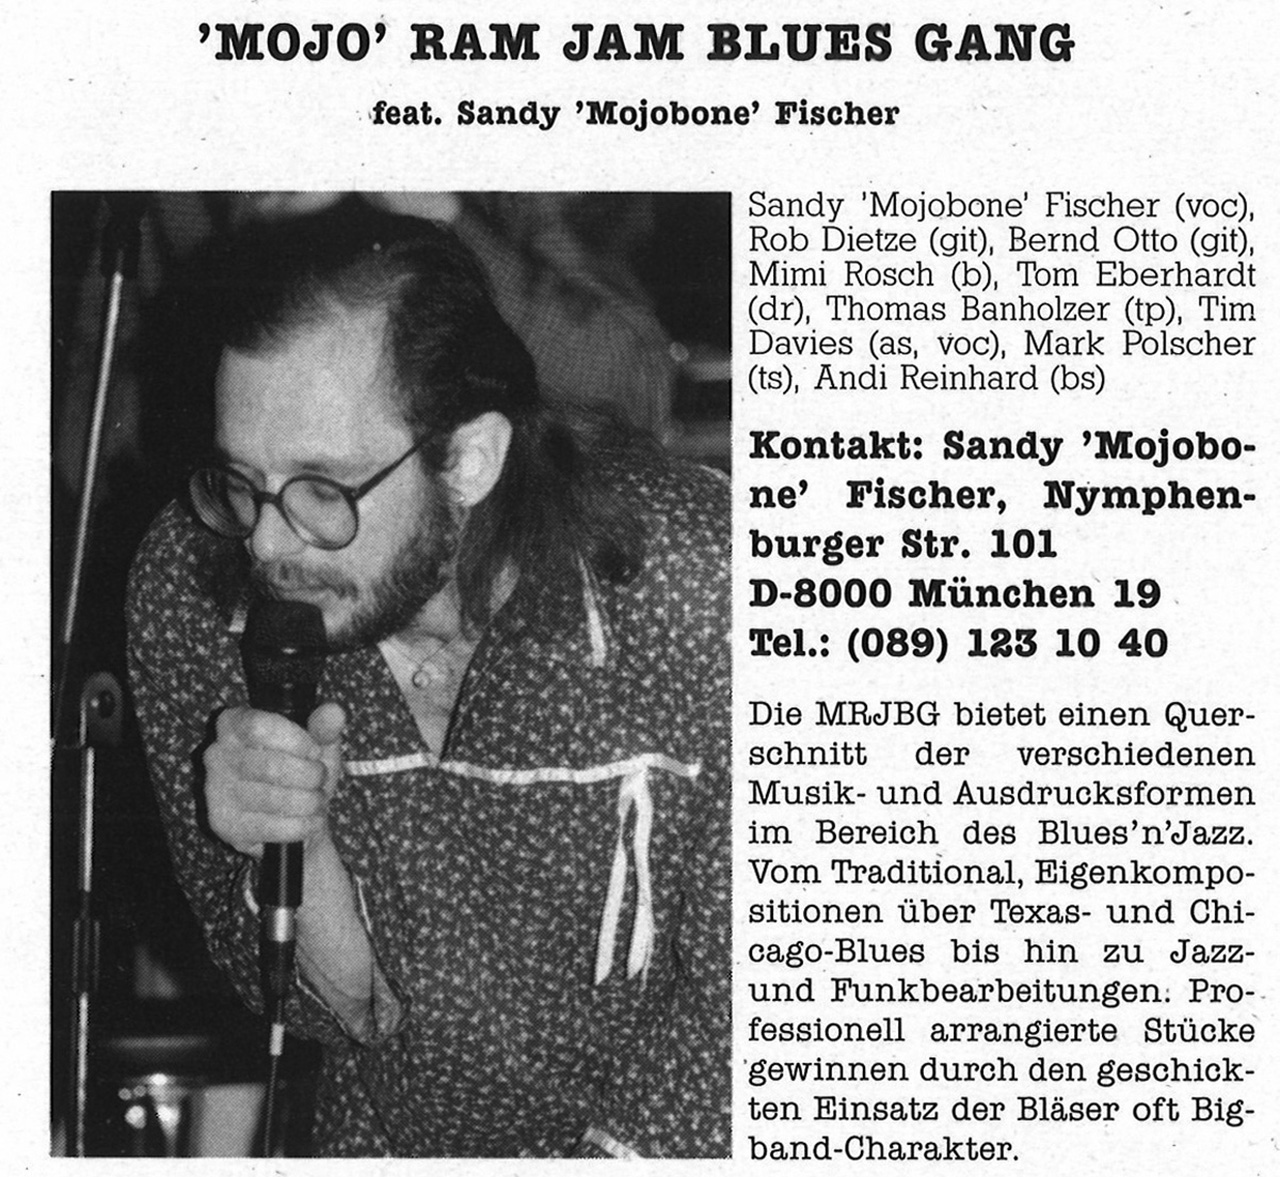 Feierwerk_Blog_Munich_Blues_LP_Sunrise_1988_ Band 2_Mojo_Ram_Jam_Blues_Gang_(c)Feierwerk